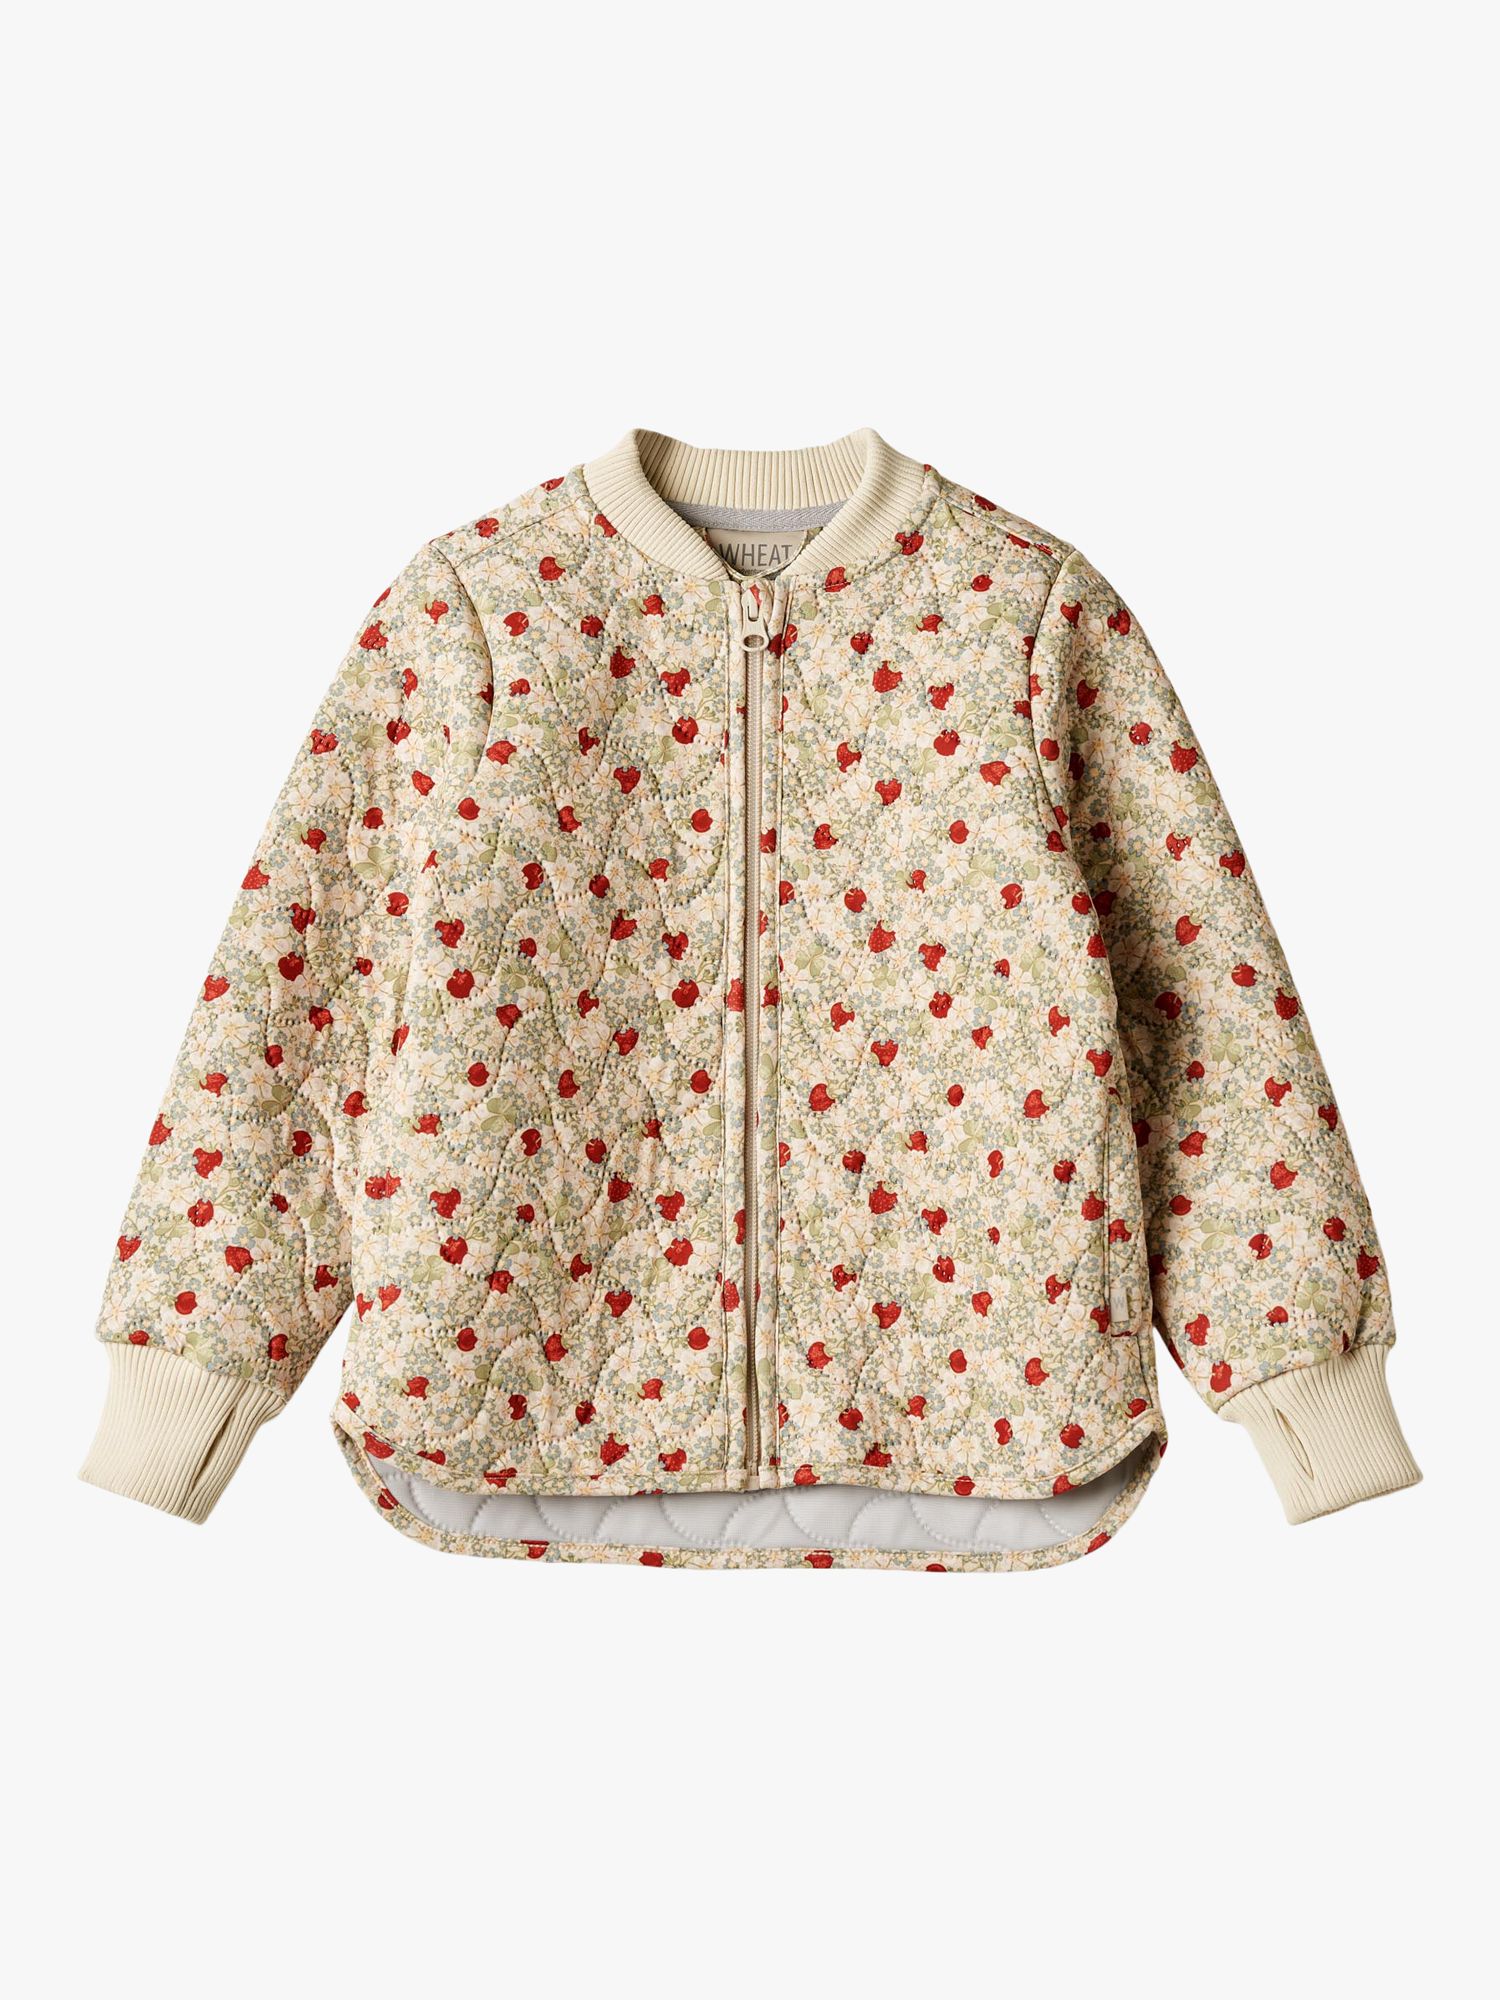 WHEAT Kids' Thermo Loui Strawberry Print Jacket, Cream/Red, 8 years